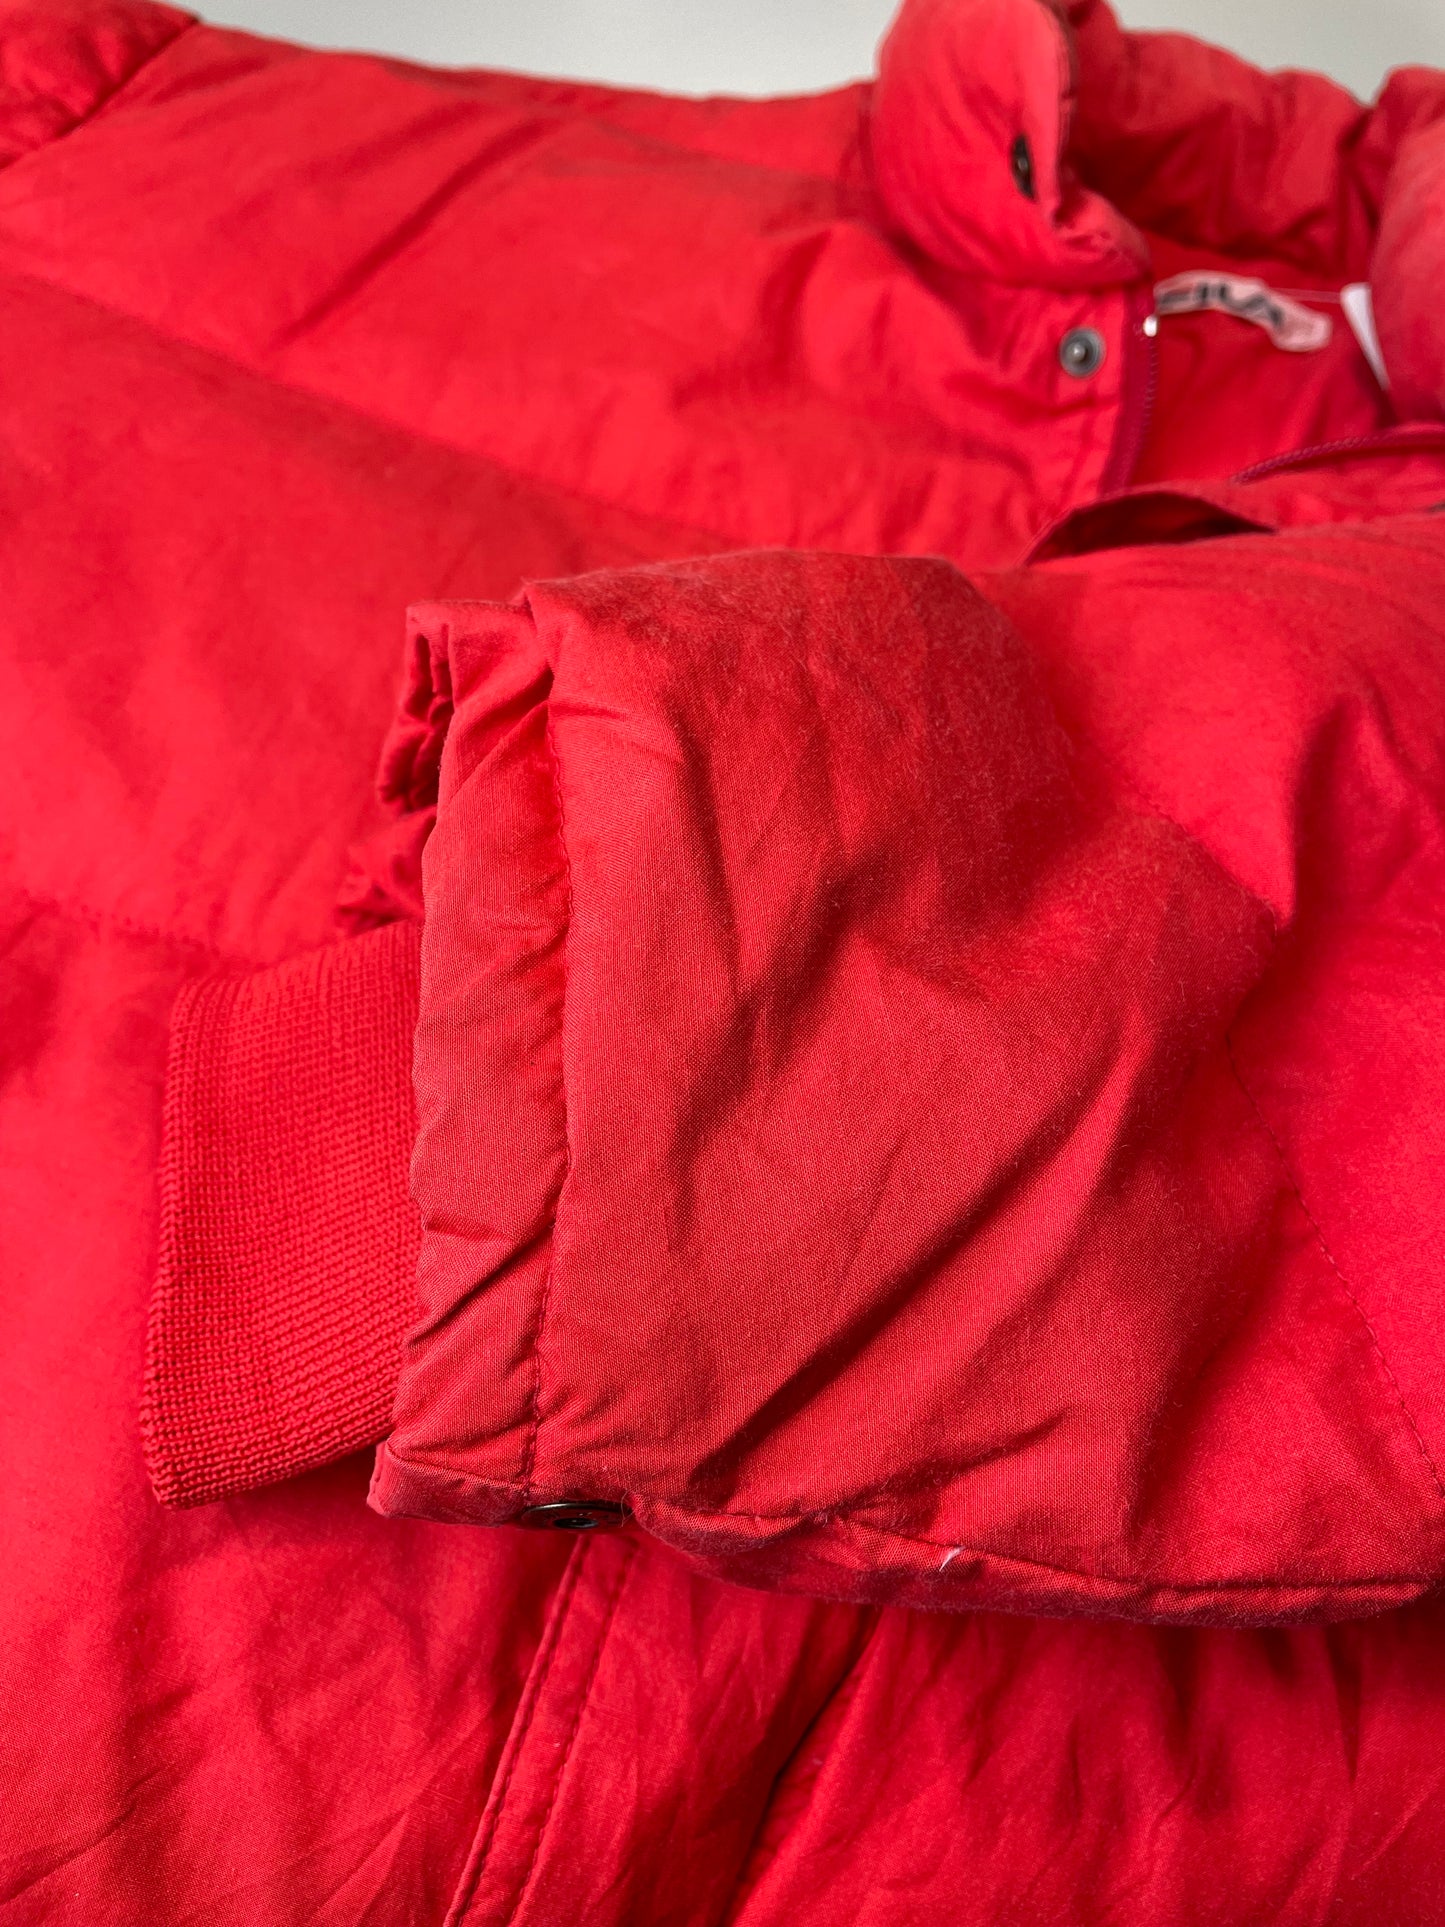 90s Fila Puffer Jacket Red  XL